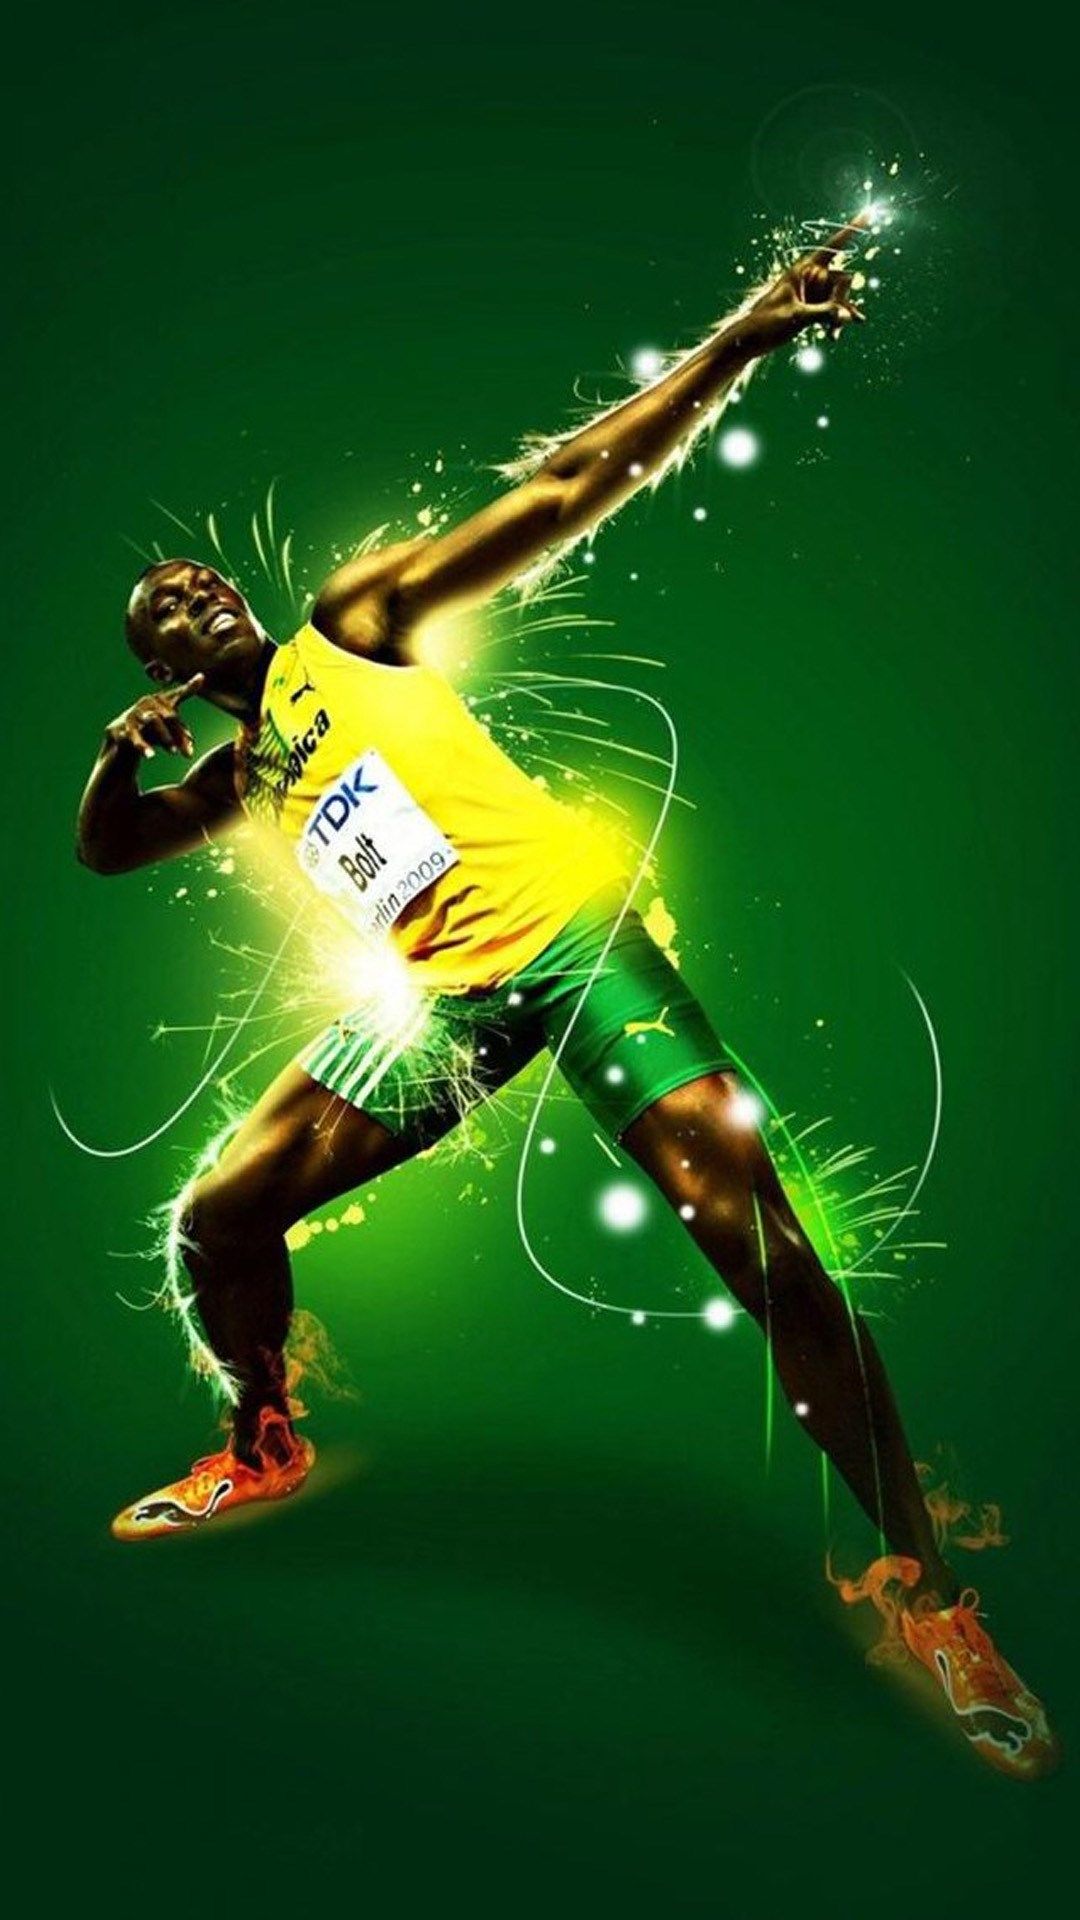 iPhone Wallpaper HD Jamajka Usain Bolt Sports